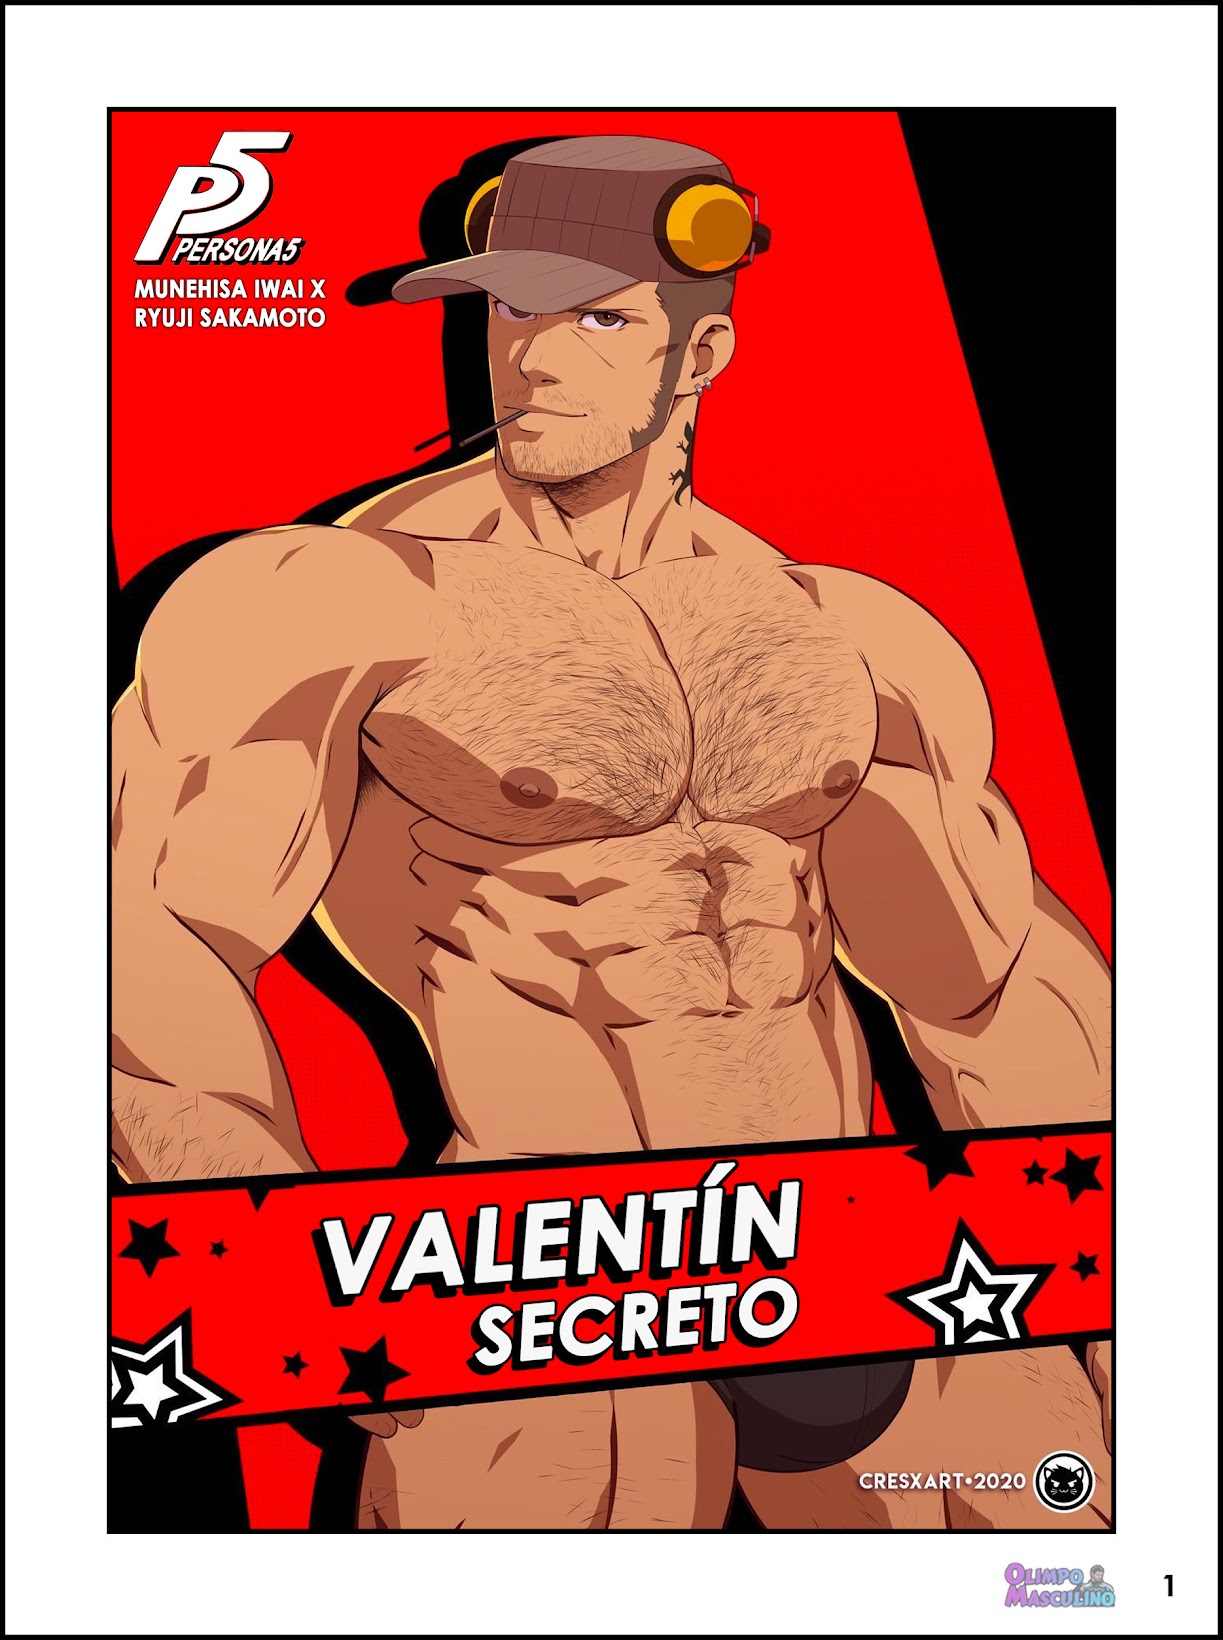 Persona 5: Valentín secreto